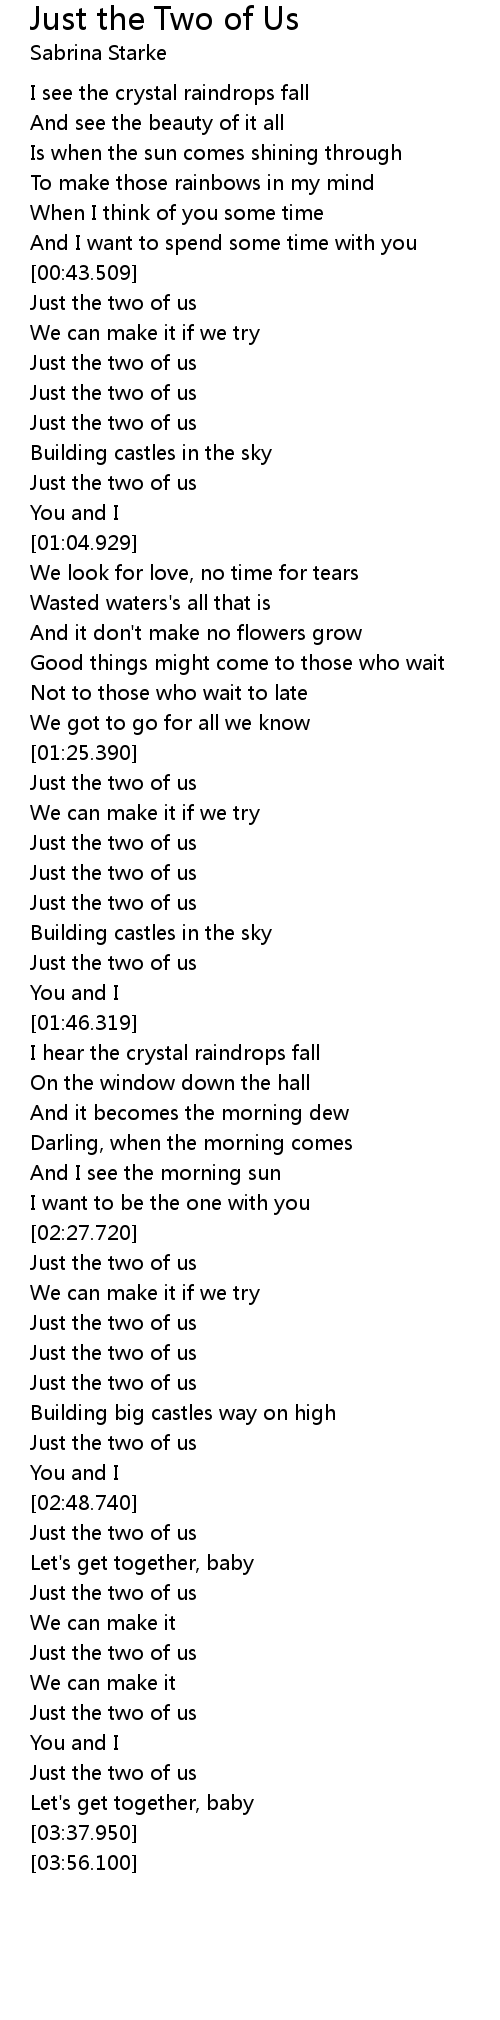 Just The Two of Us Lyrics